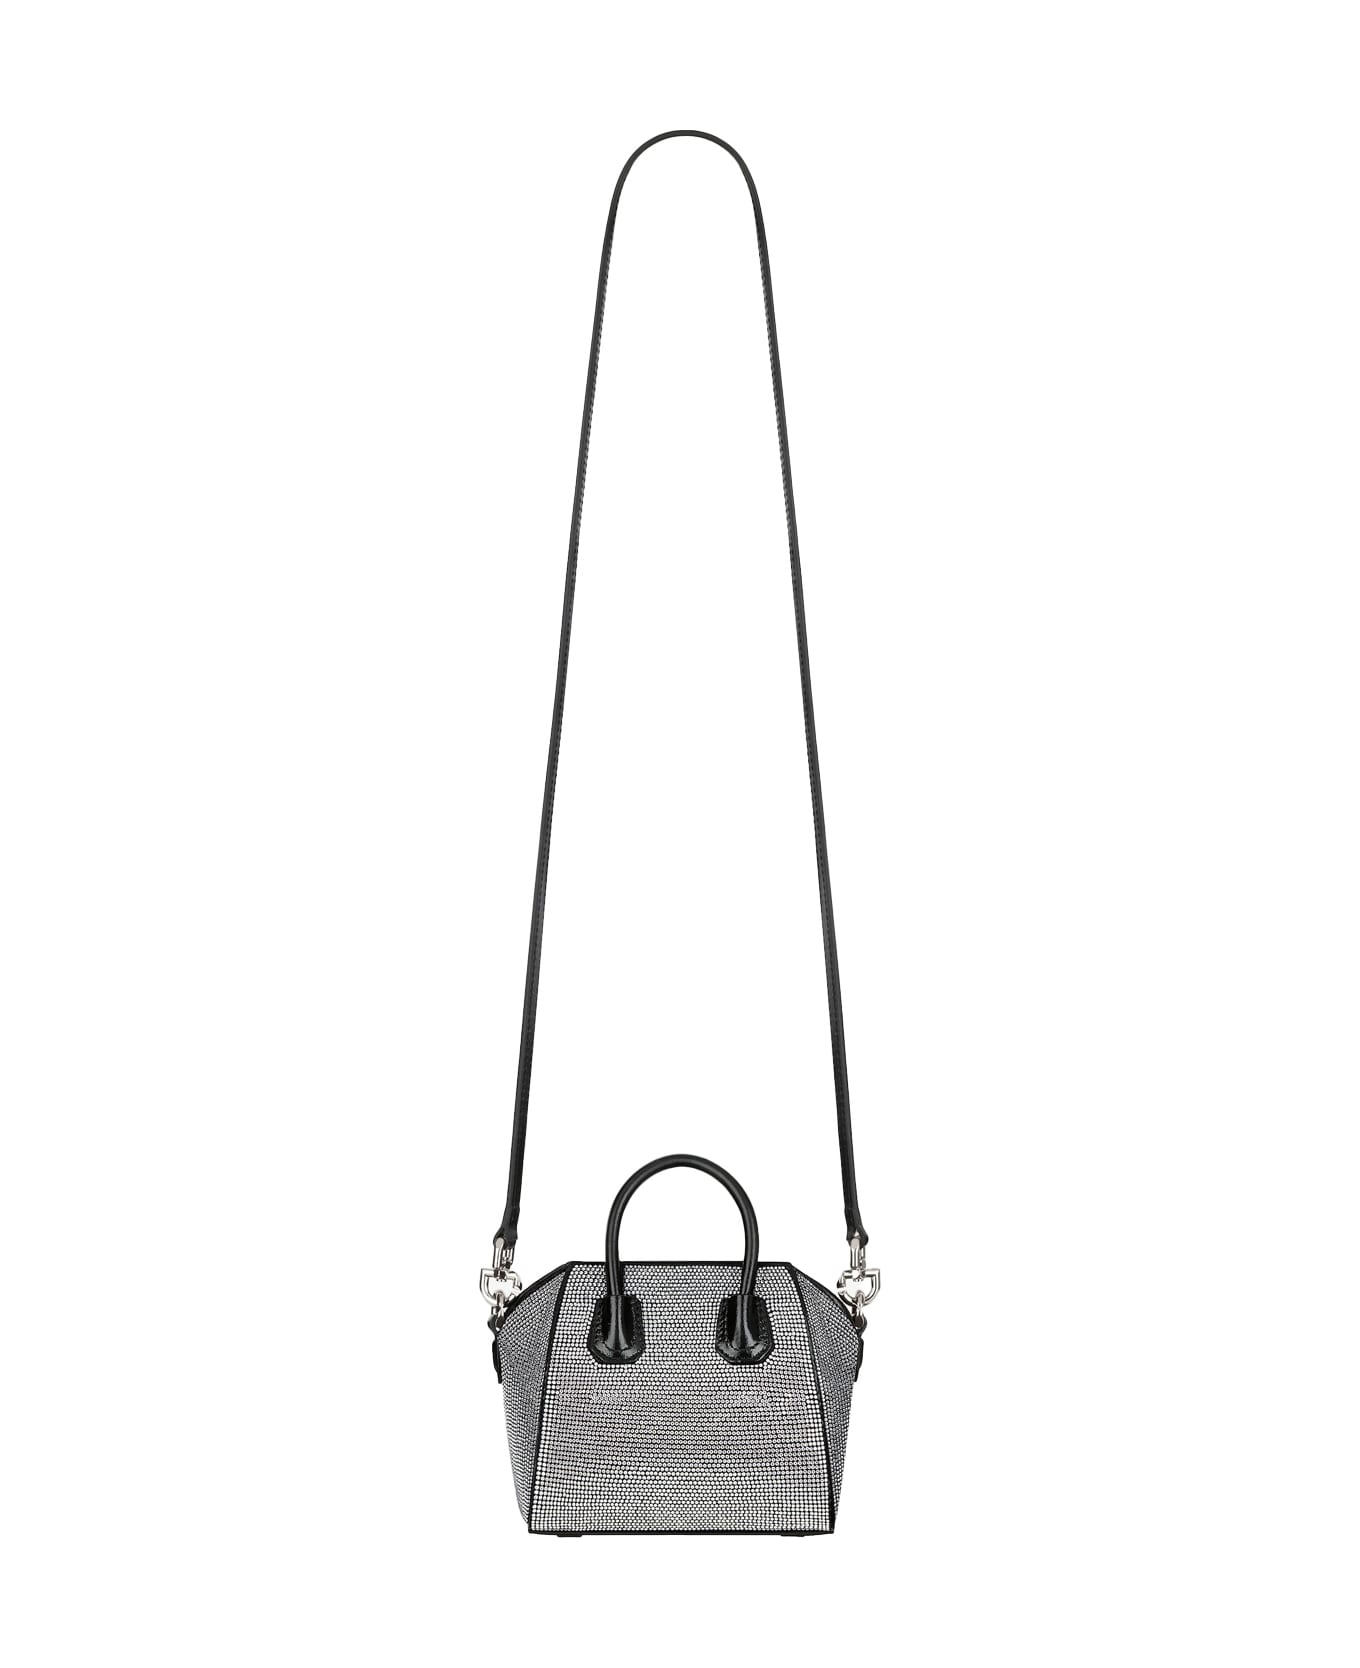 Givenchy Antigona Handbag - Black トートバッグ